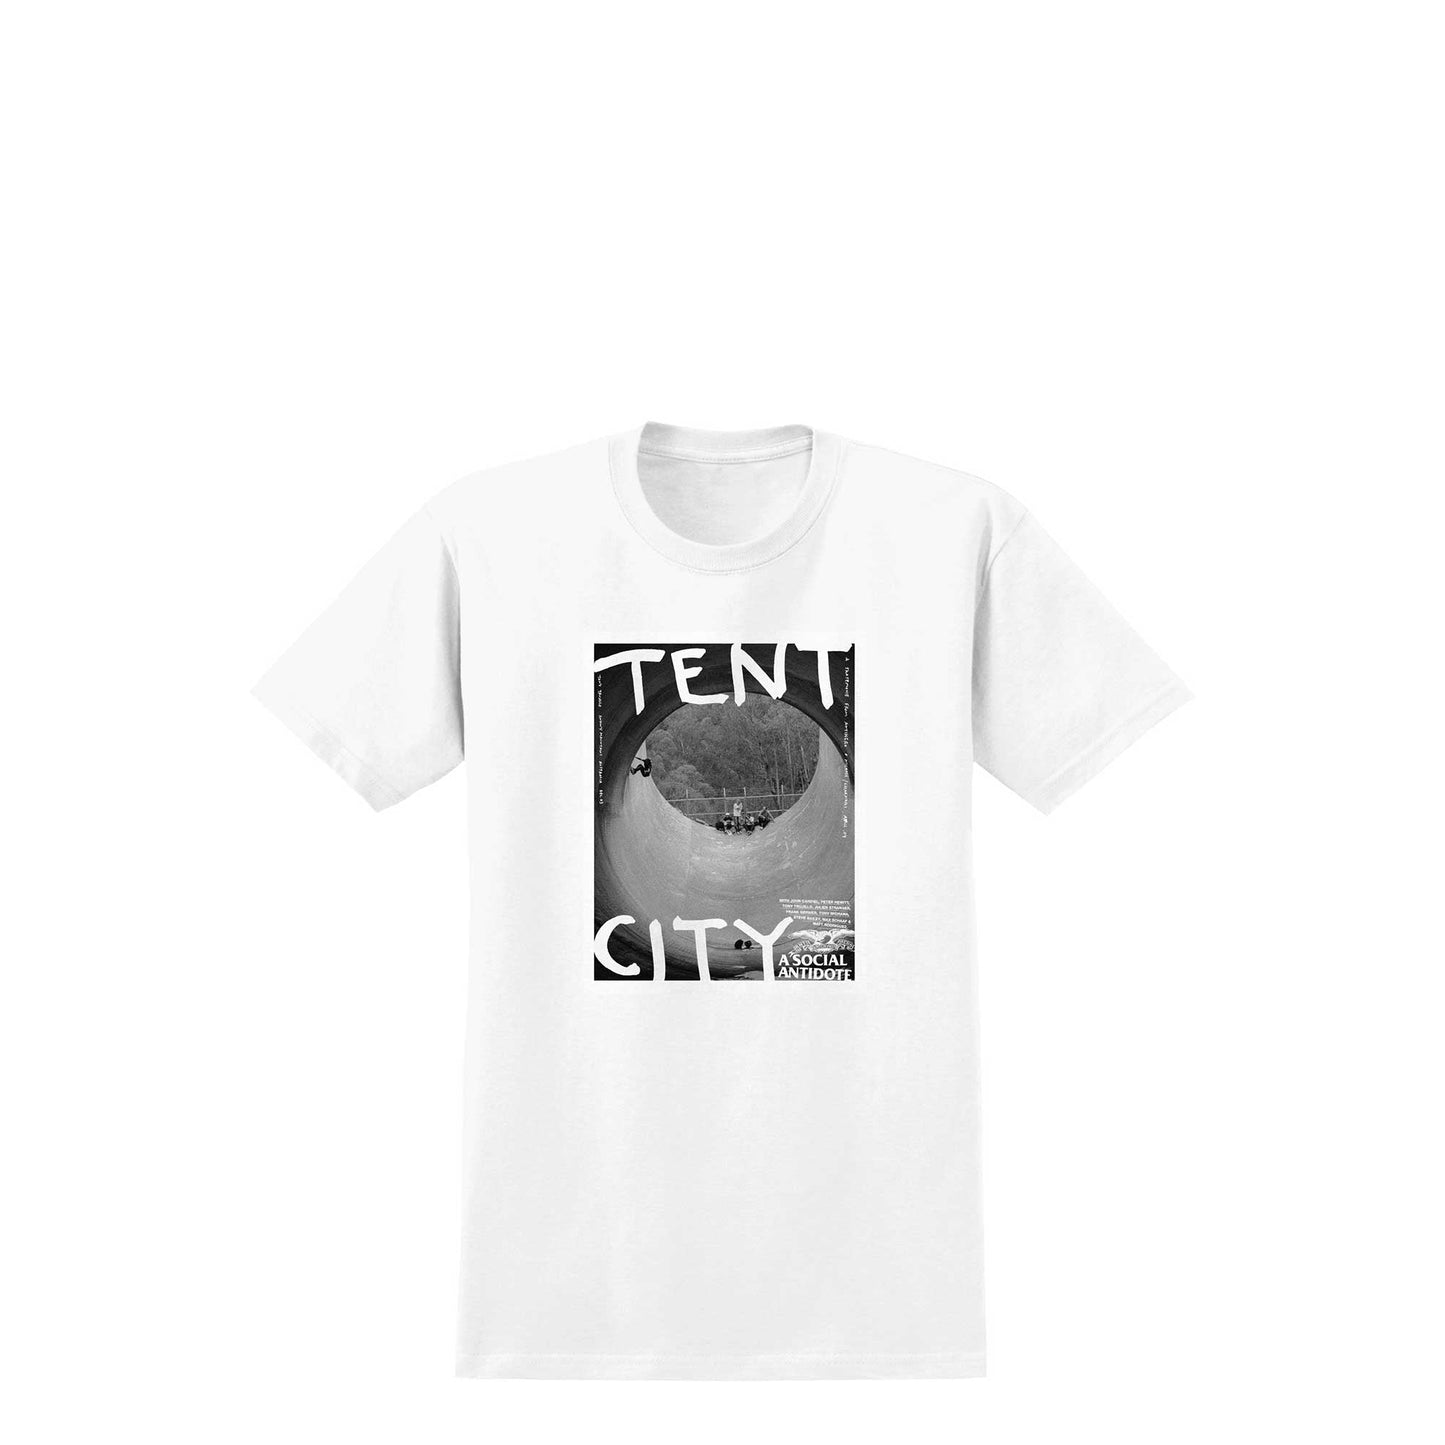 Antihero Tent City T-Shirt, white w/ photo print - Tiki Room Skateboards - 1